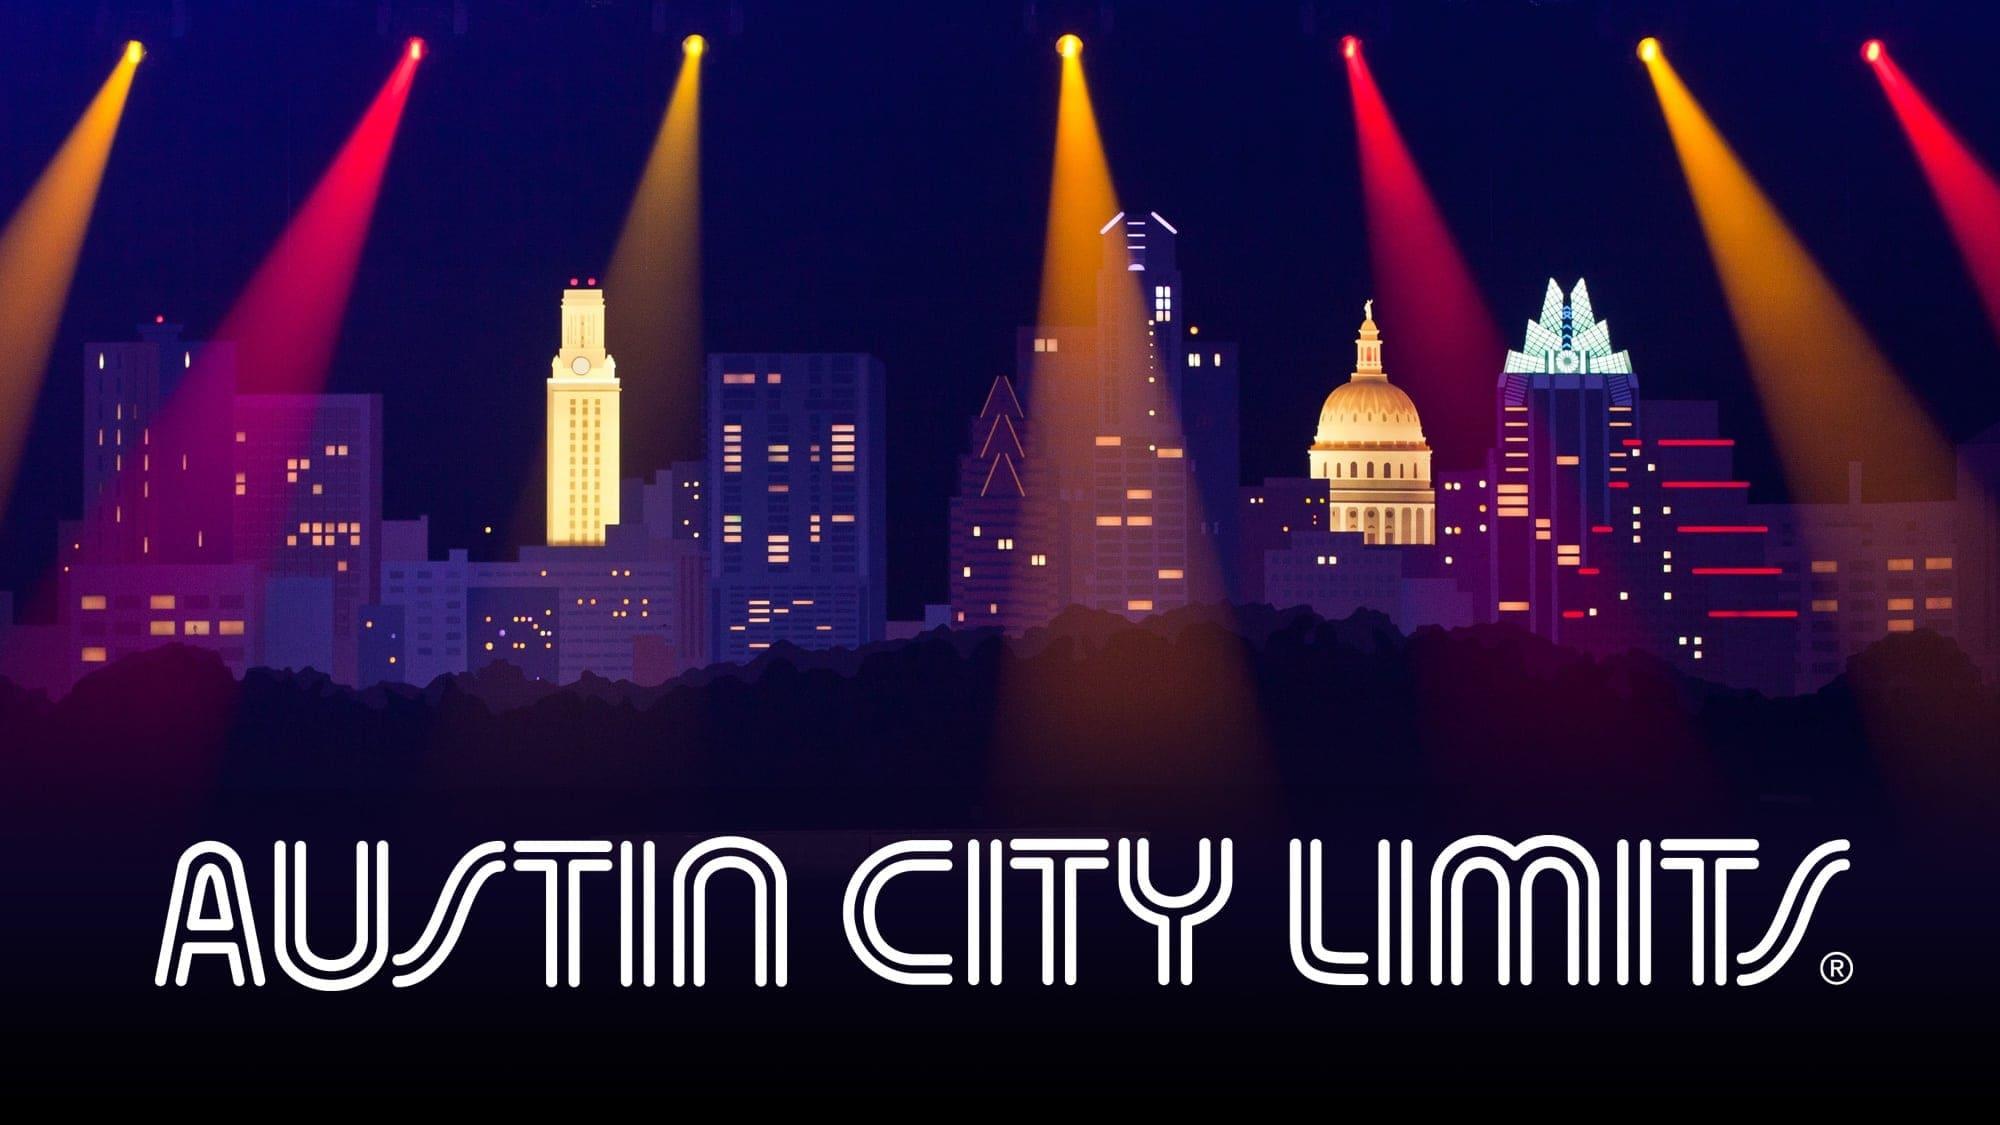 Austin City Limits backdrop